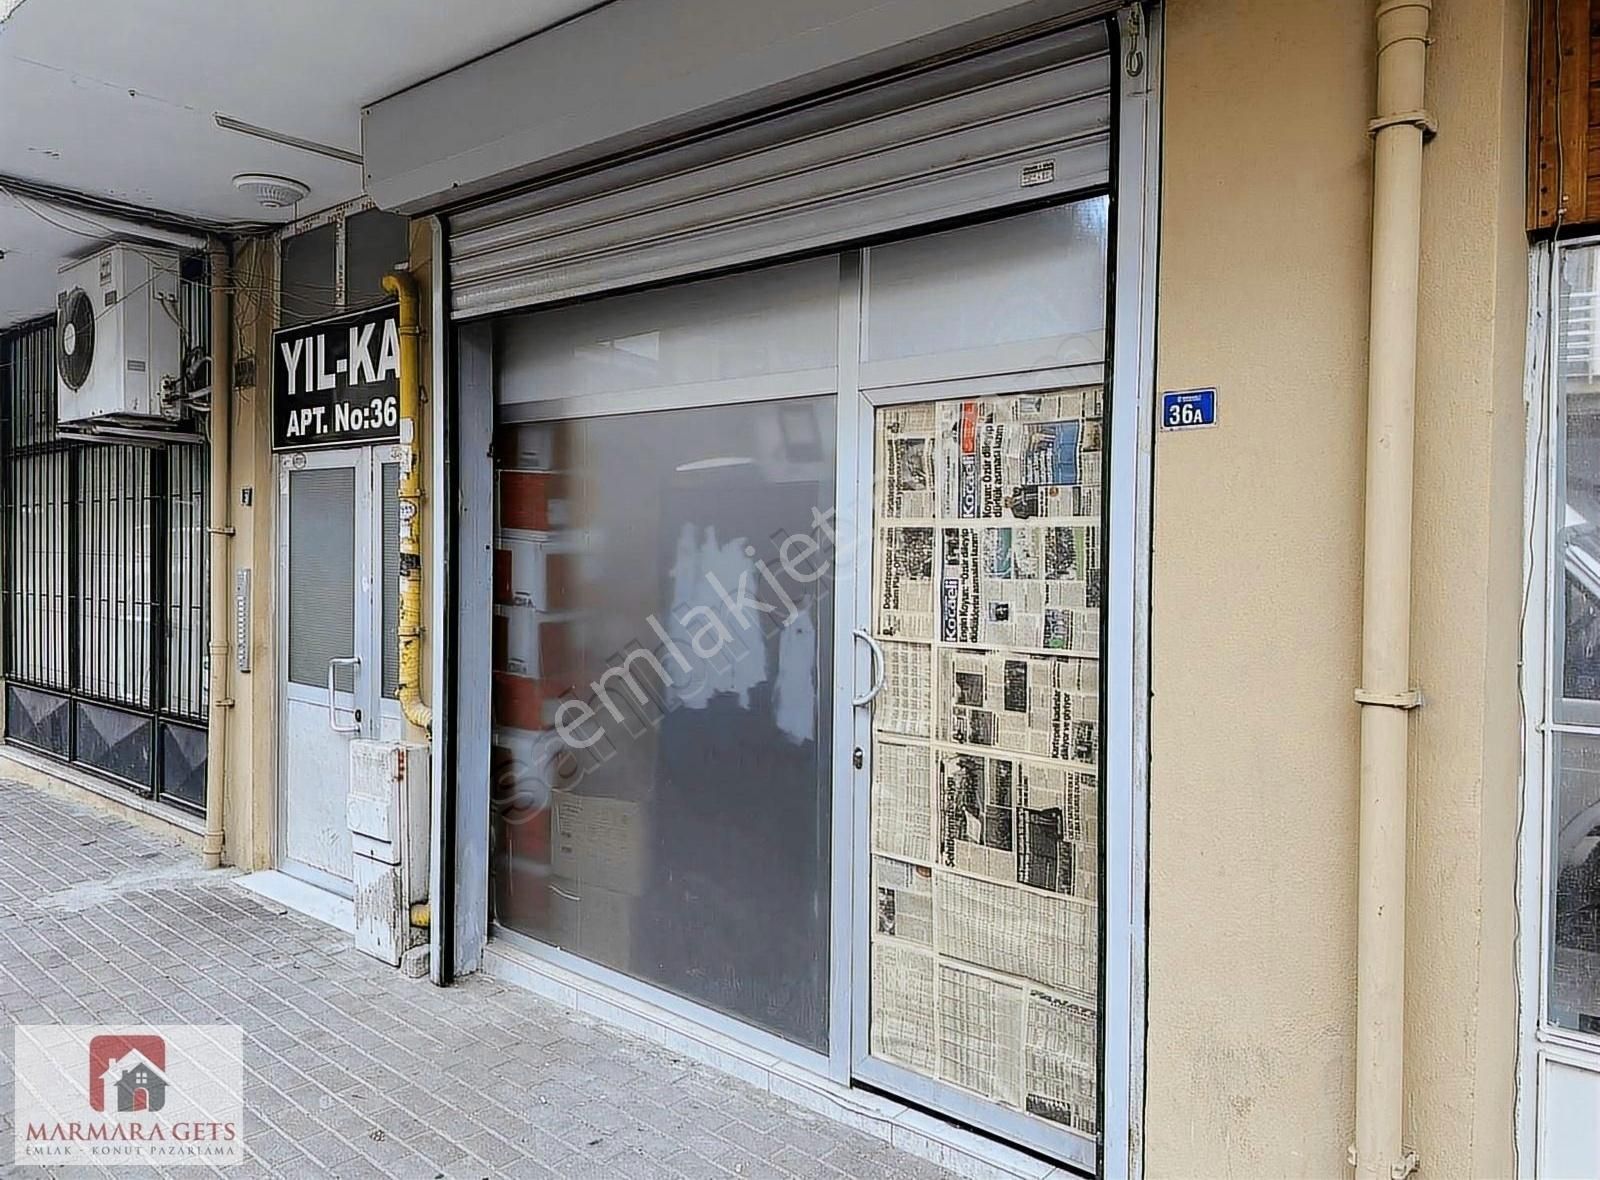 İzmit Kadıköy Satılık Dükkan & Mağaza MARMARA GETS - İZMİT KADIKÖY MAHALLESİ SATILIK DÜKKAN